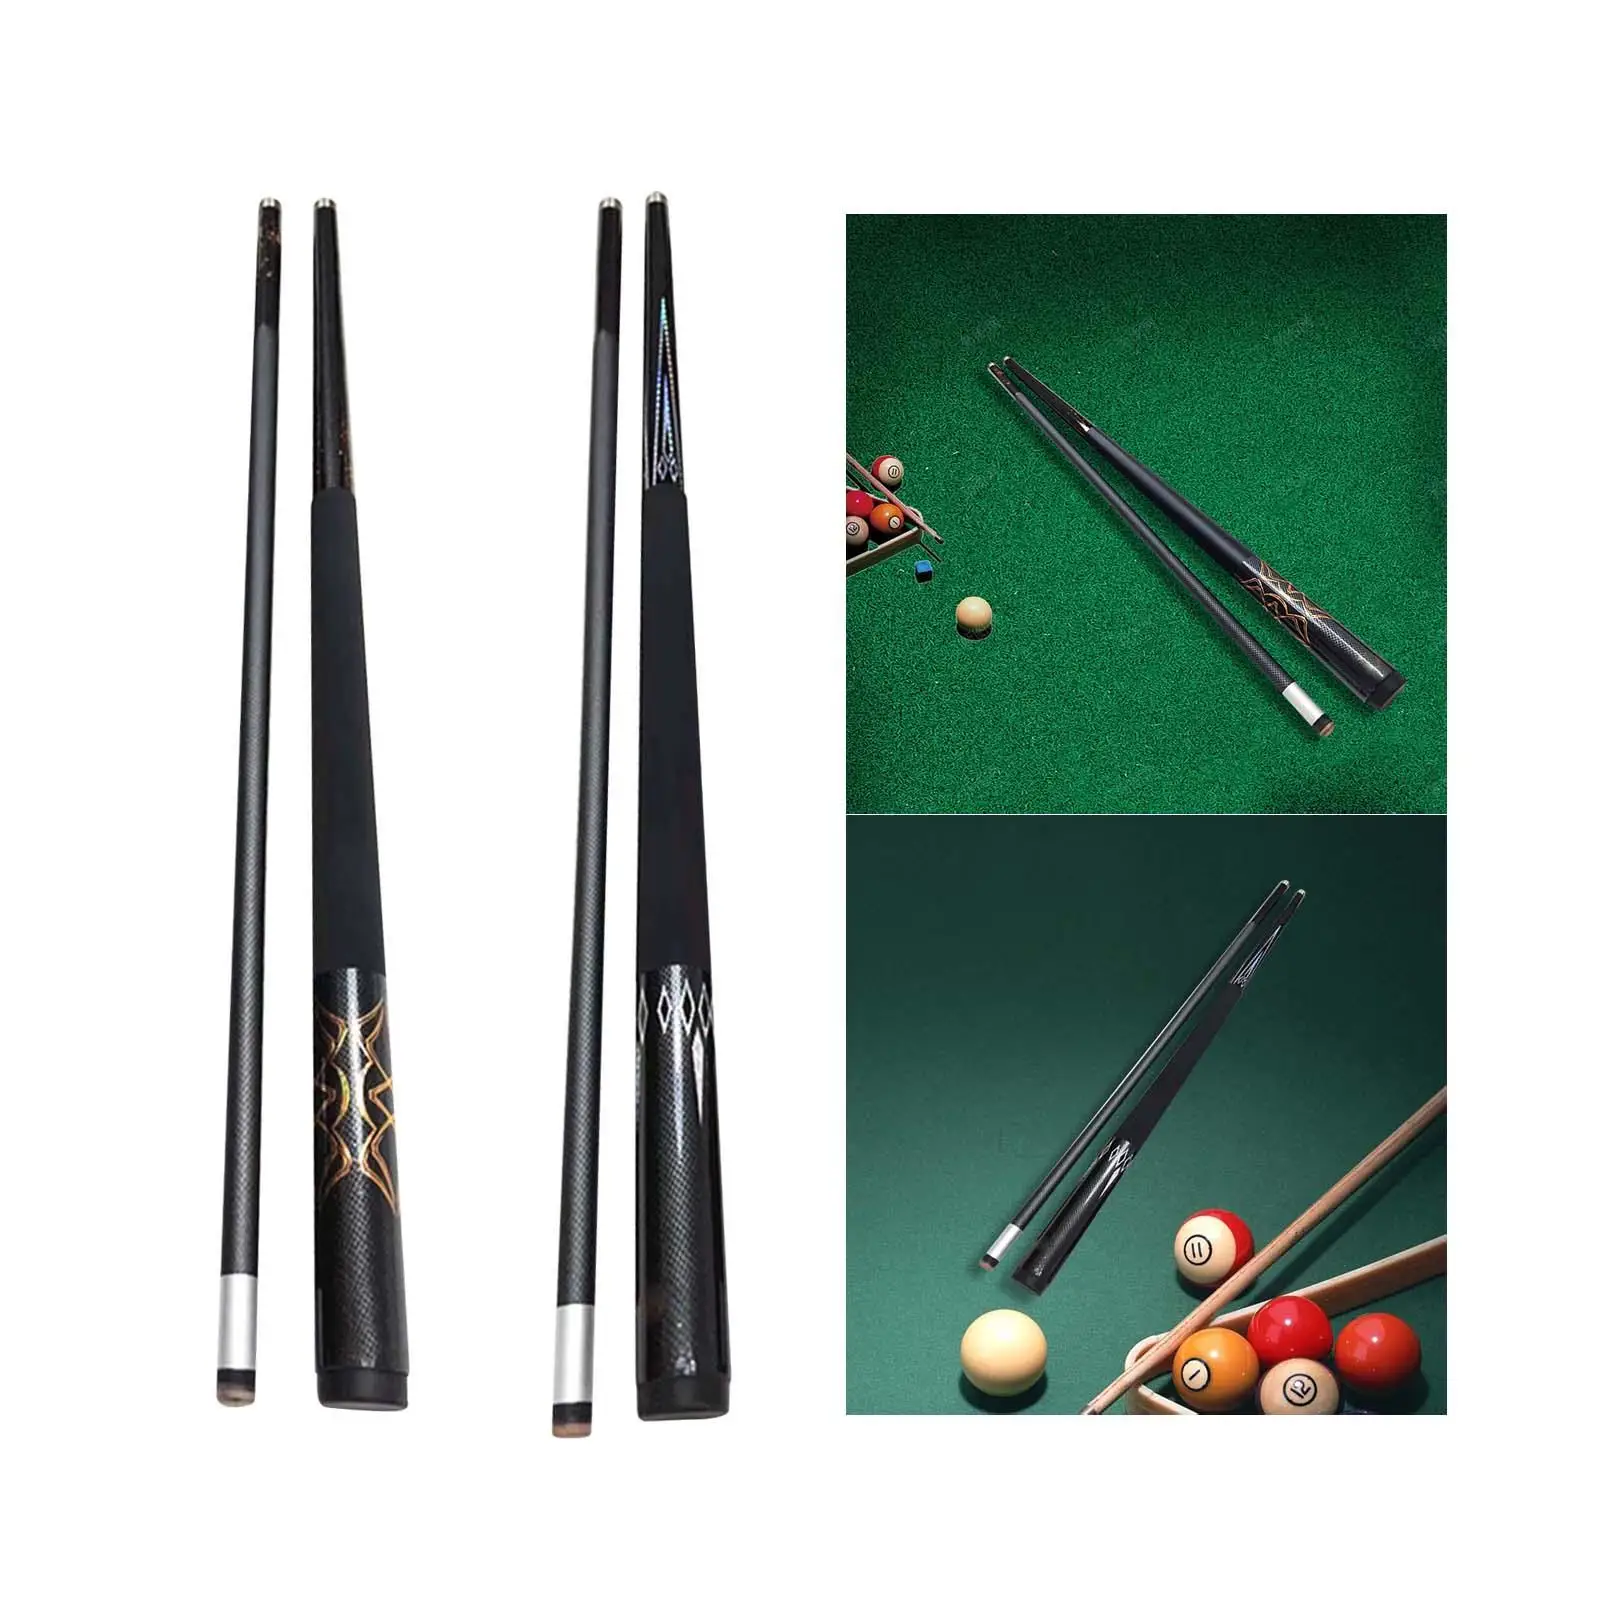 Pool Cue Sticks, Billiard Cue, Two Section Carbon Fiber Snooker Cue, Billiard Pool Sticks for Men Women